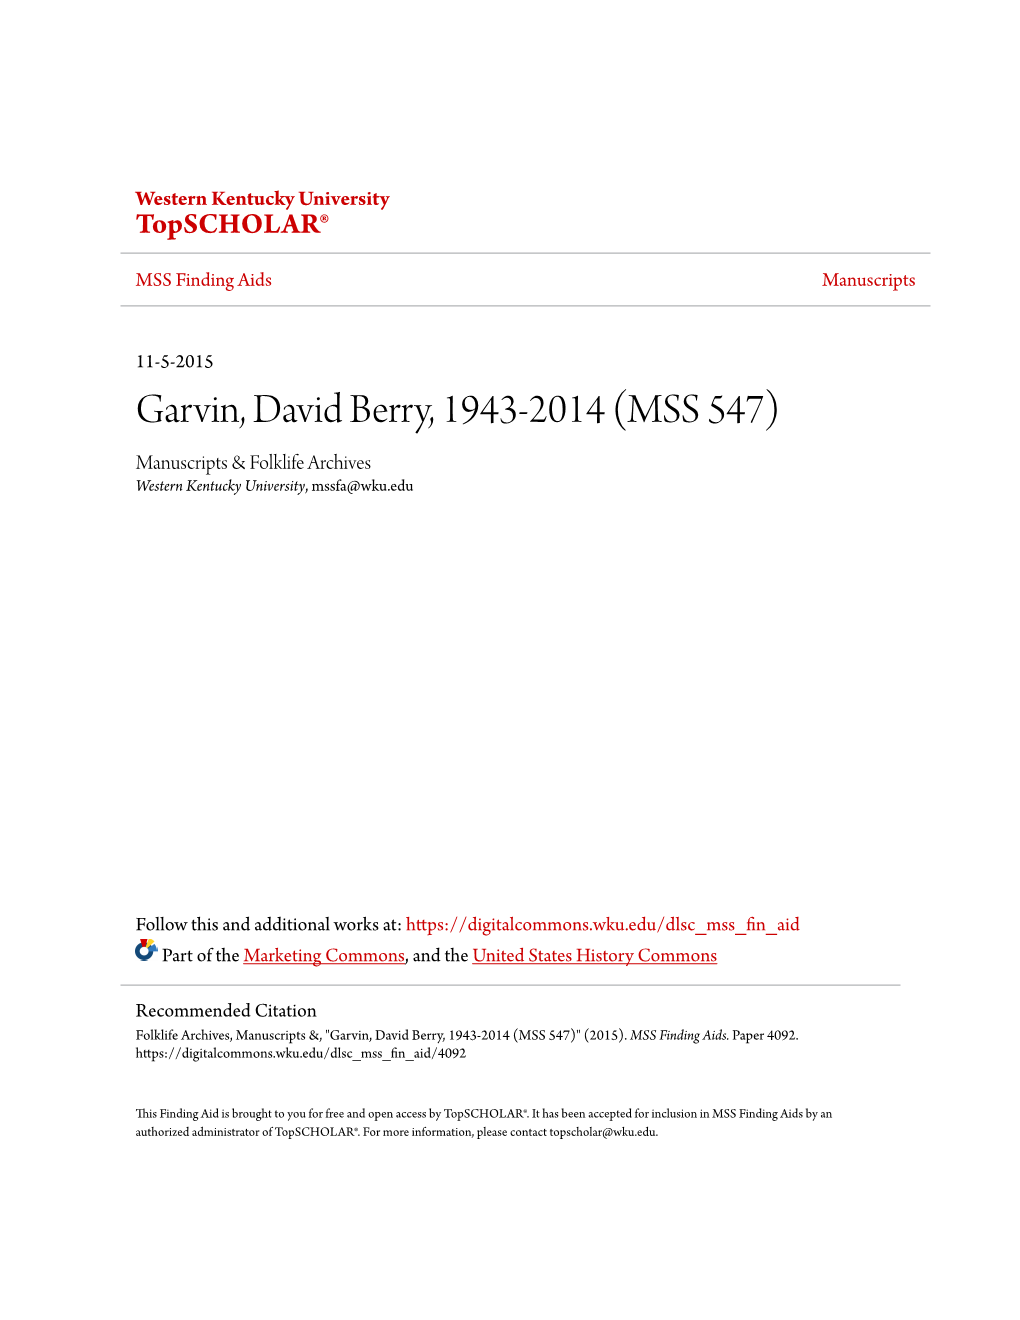 Garvin, David Berry, 1943-2014 (MSS 547) Manuscripts & Folklife Archives Western Kentucky University, Mssfa@Wku.Edu